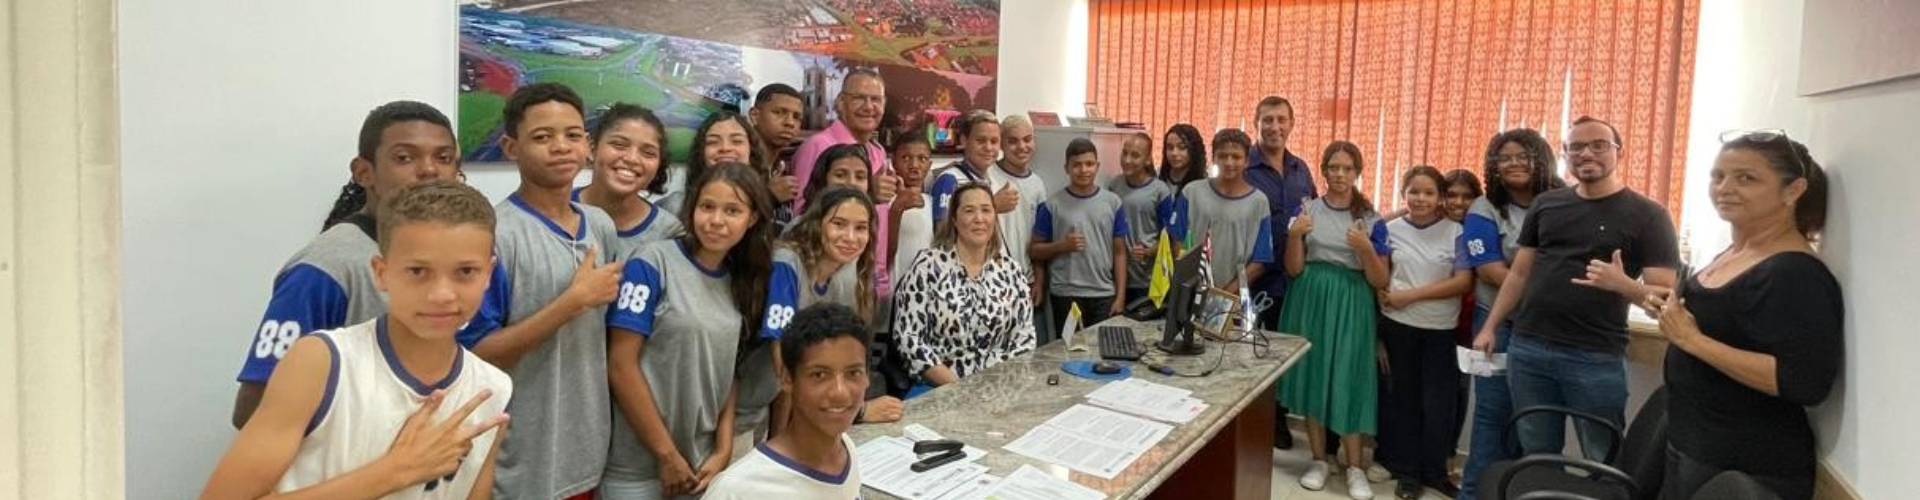 Visita alunos Escola Estadual Sebastião Gomes